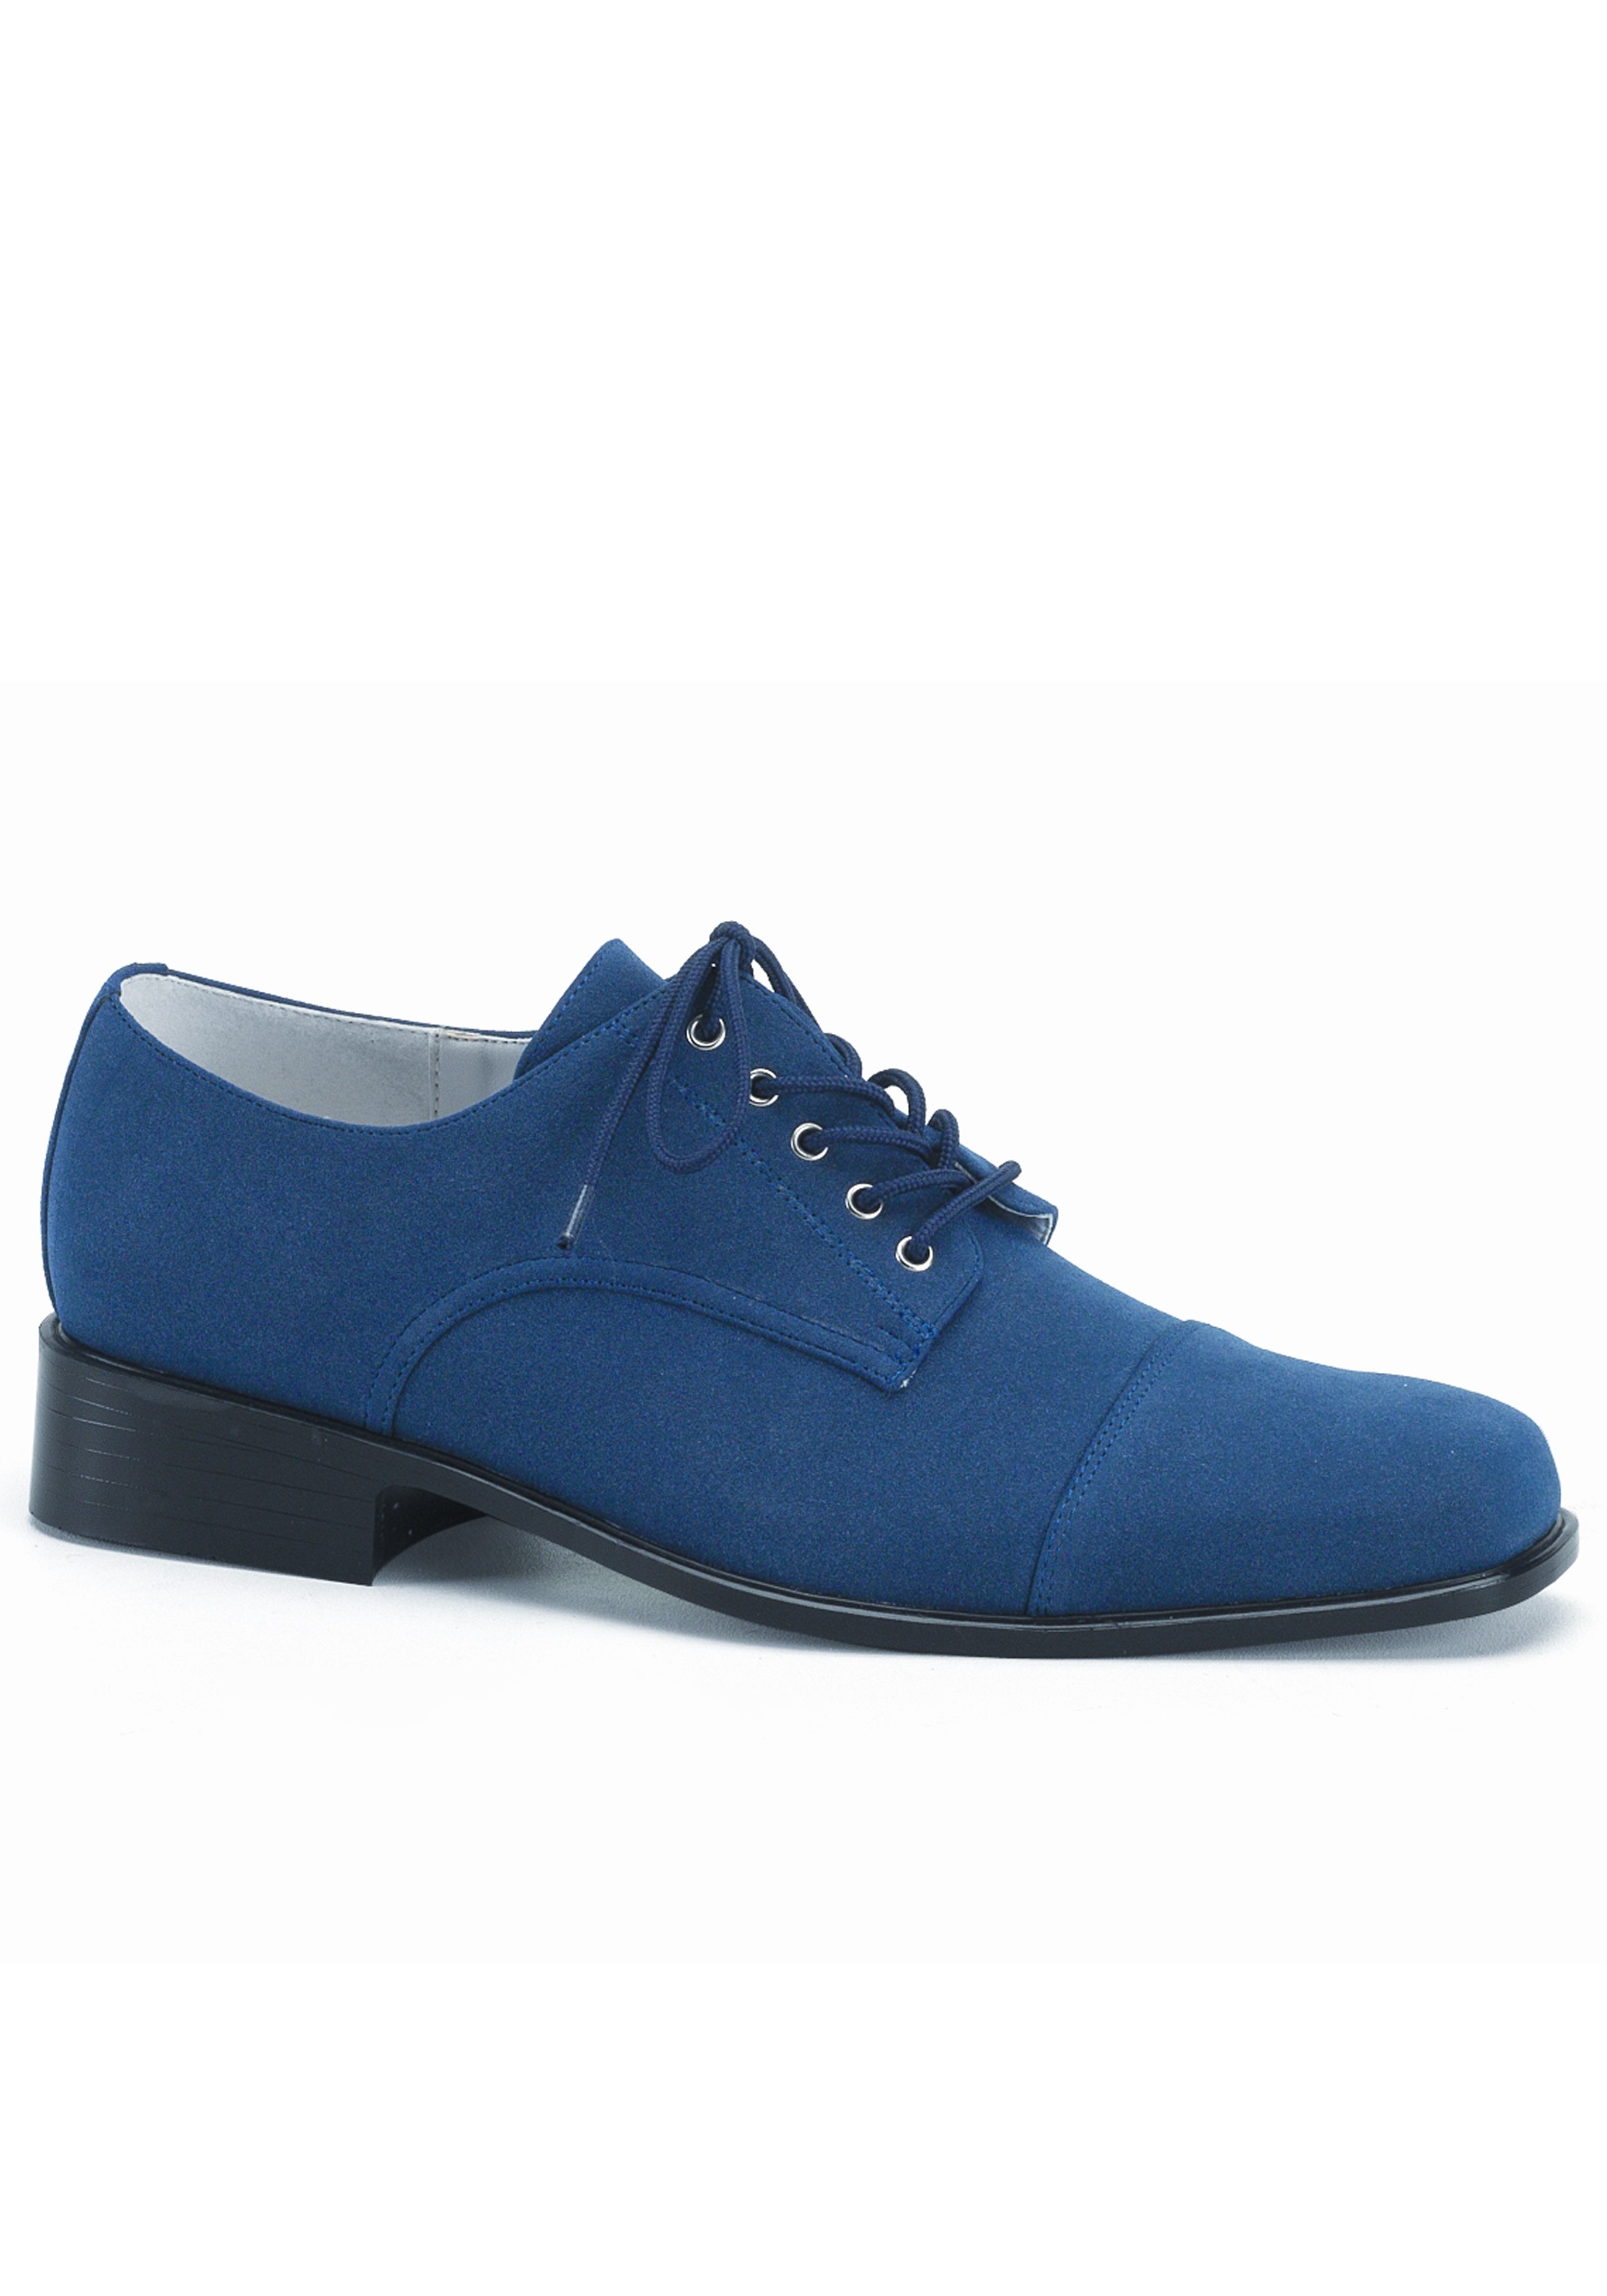 Blue Suede Shoes PNG - 58282